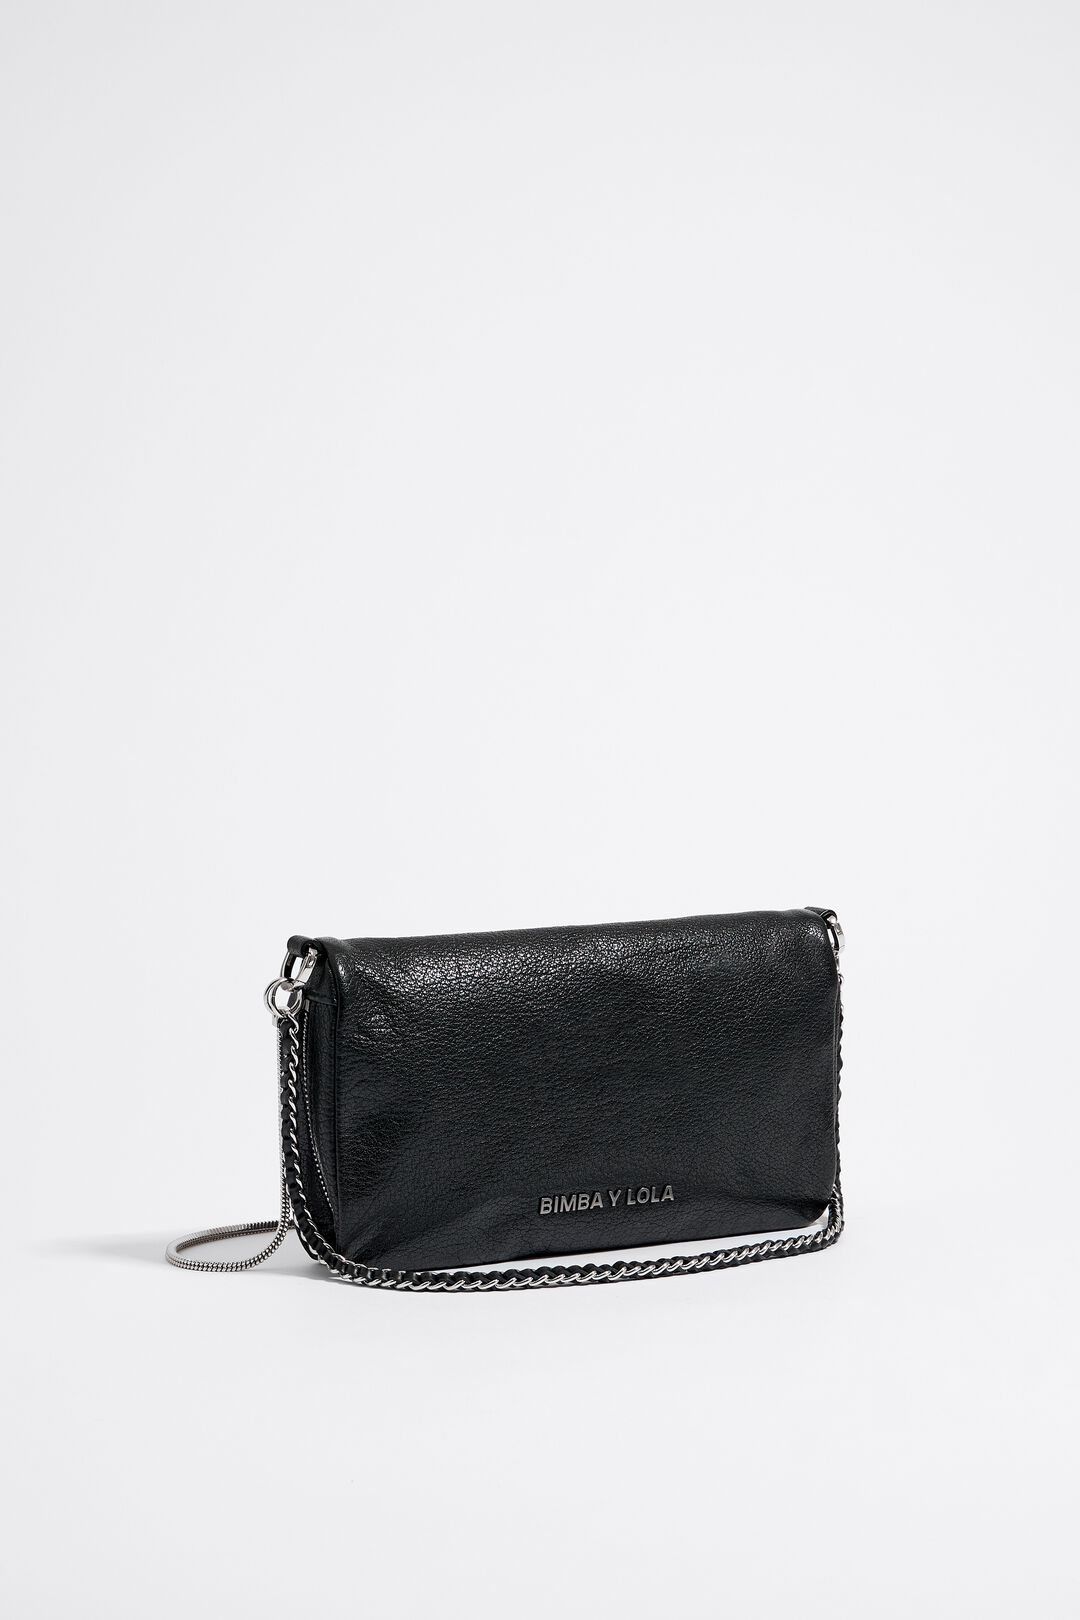 S black leather crossbody bag